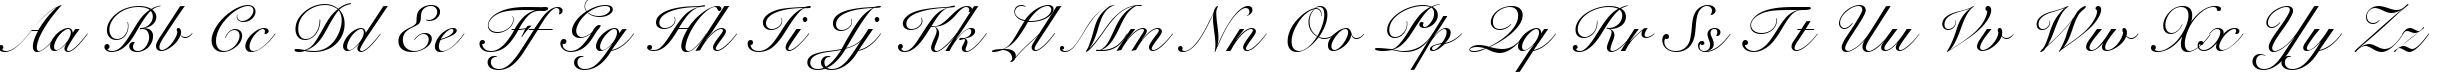 Пример написания английского алфавита шрифтом Snell BT